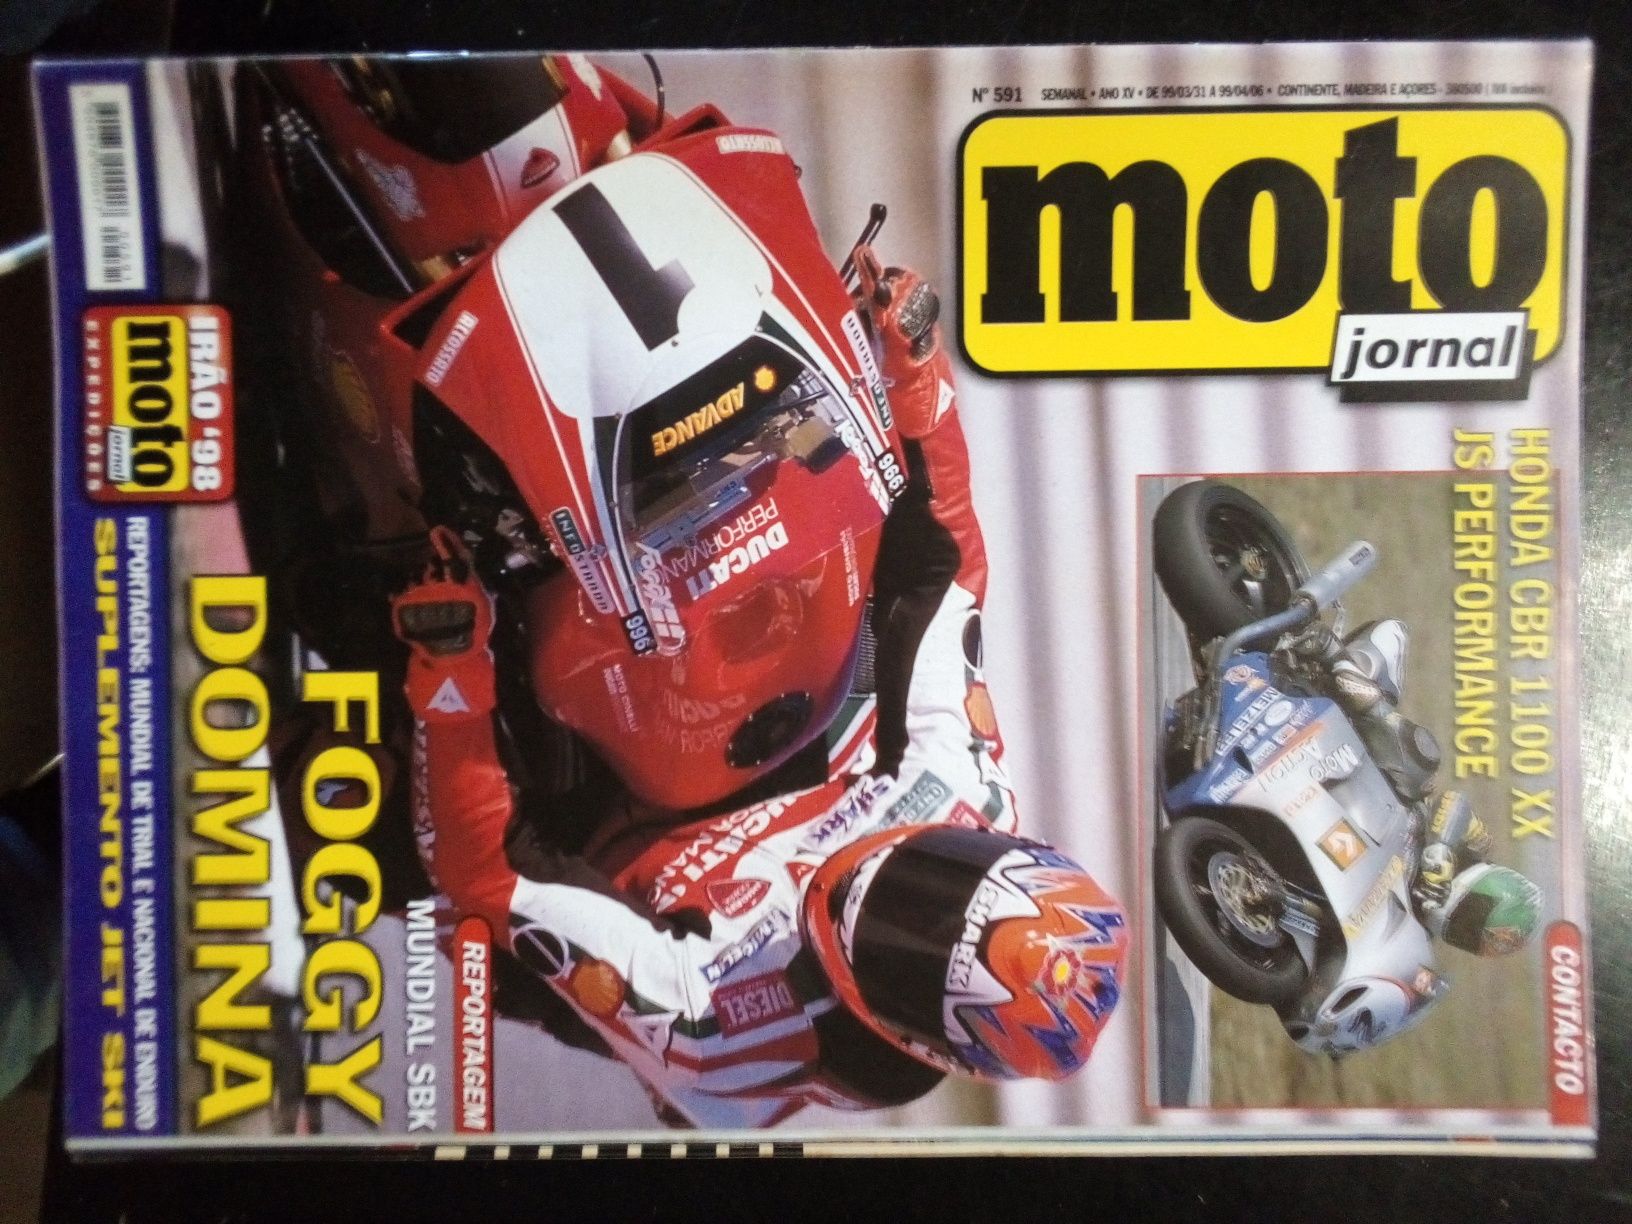 Revistas Moto Jornal